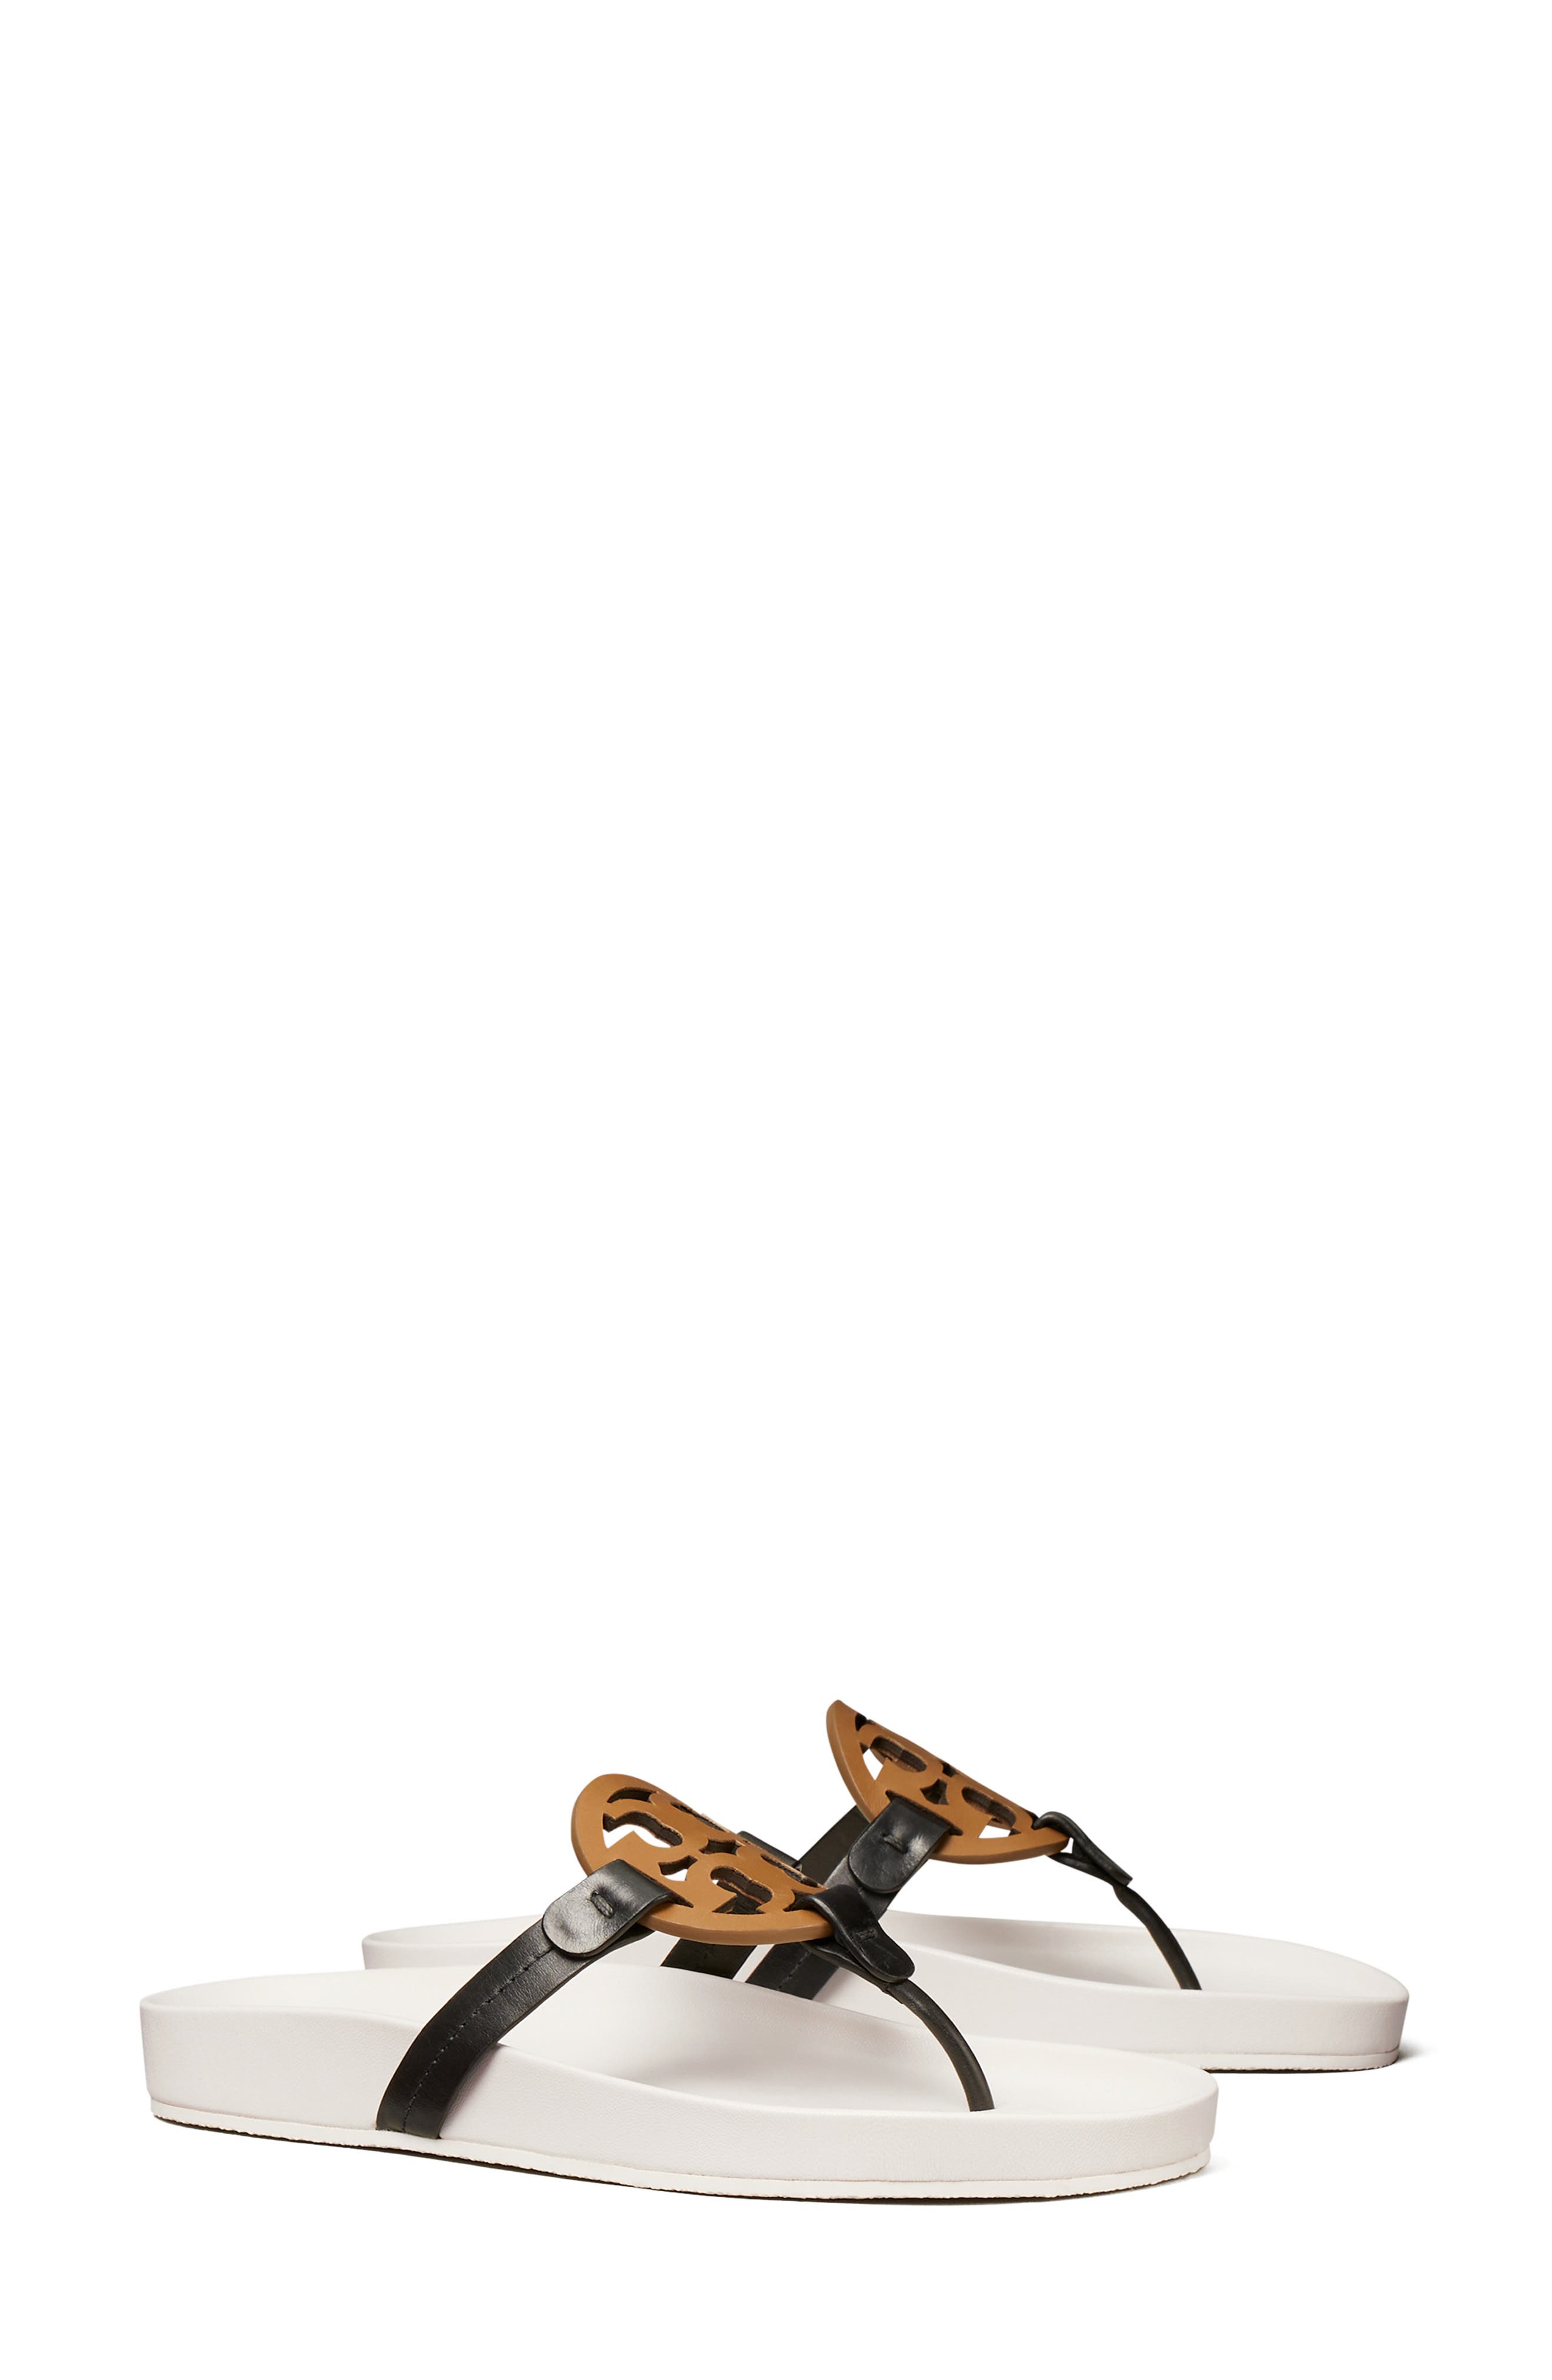 Genuine Leather Cross Strap Slingback Sandals Women Casual Flats Shoes Black Offwhite Women Sandals,Beige,7.5